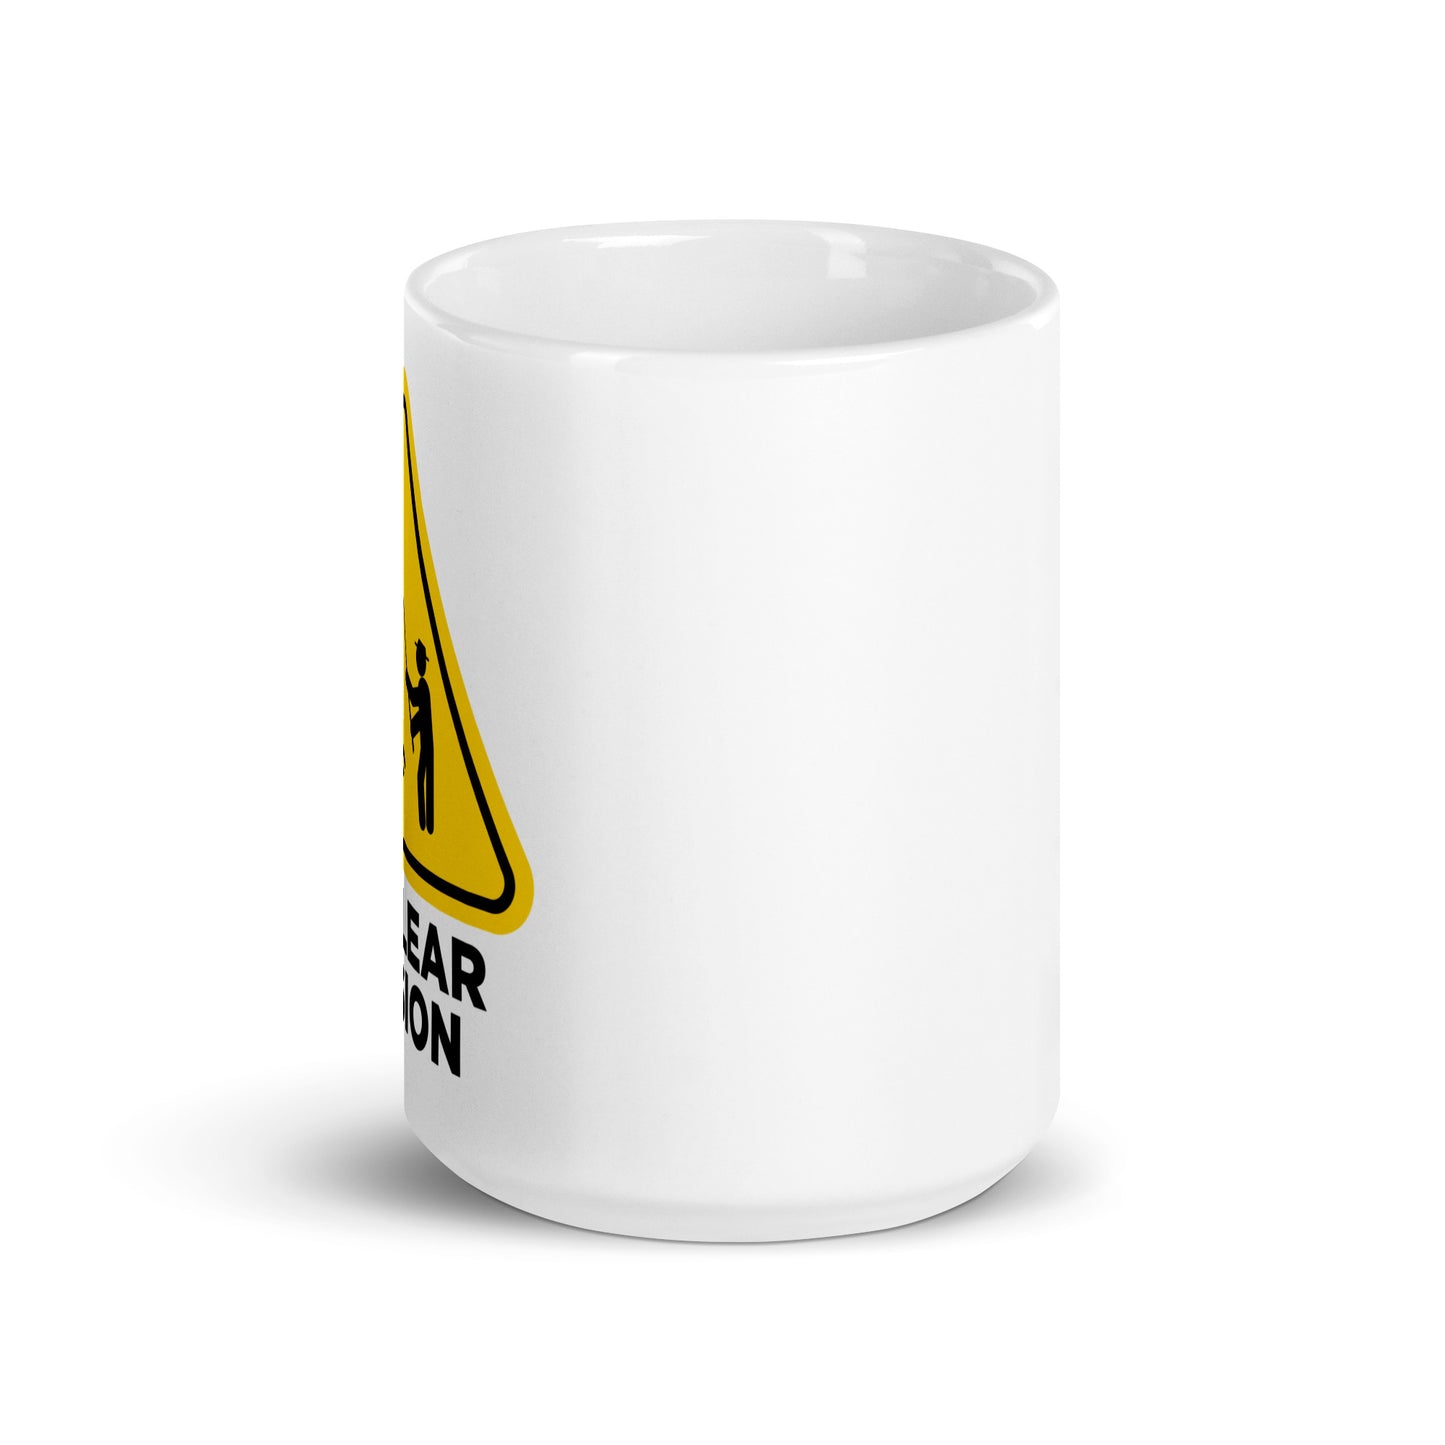 Nuclear Fission mug